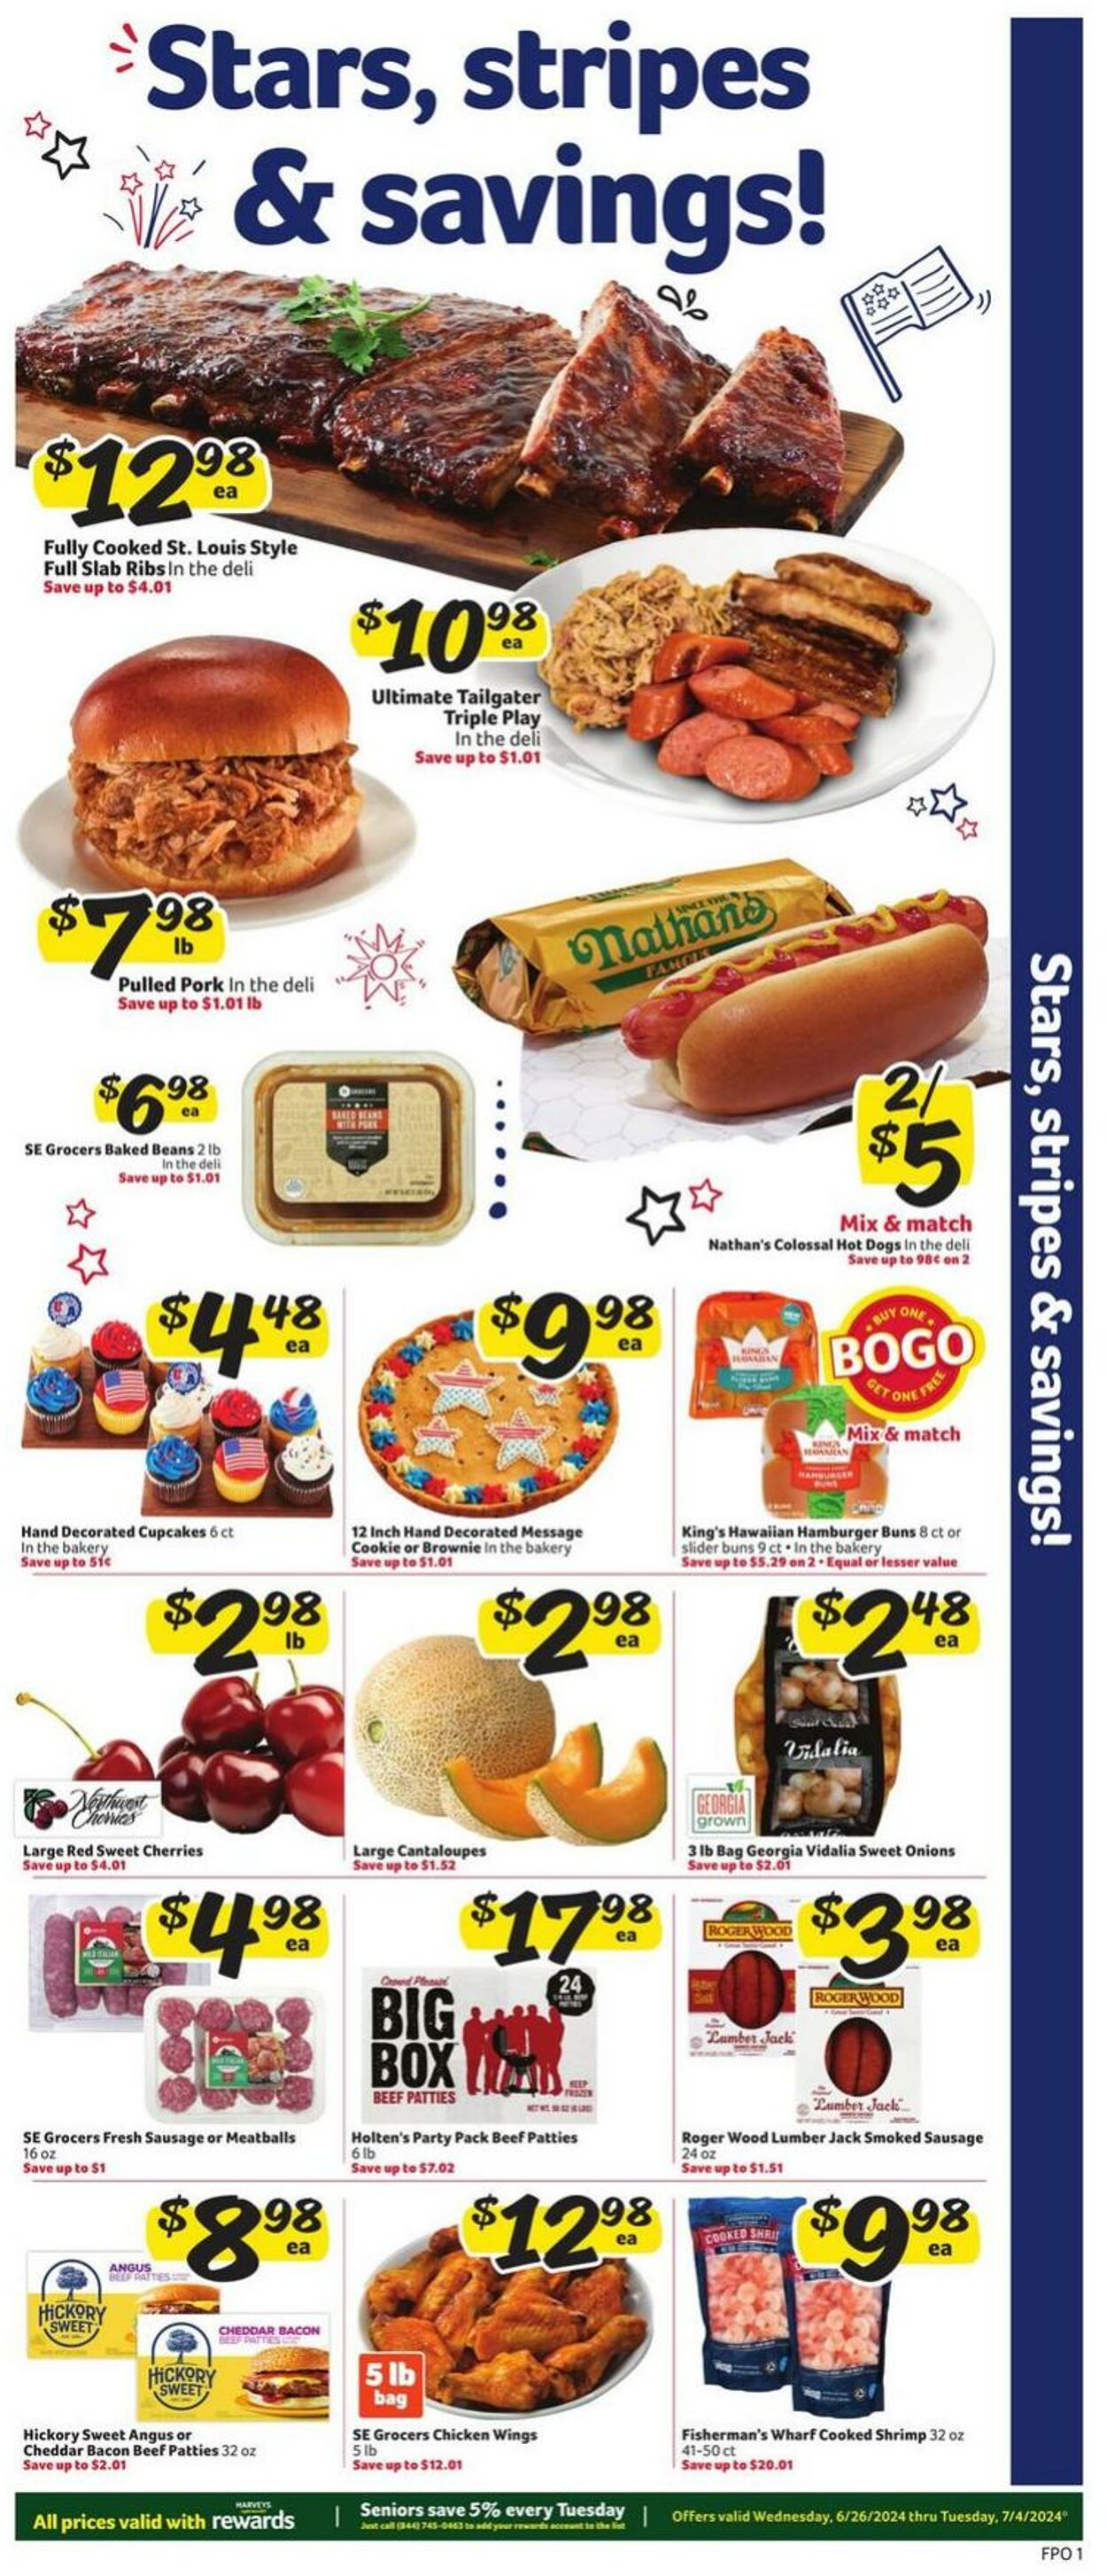 Weekly ad Harvey's Supermarkets 06/26/2024 - 07/04/2024